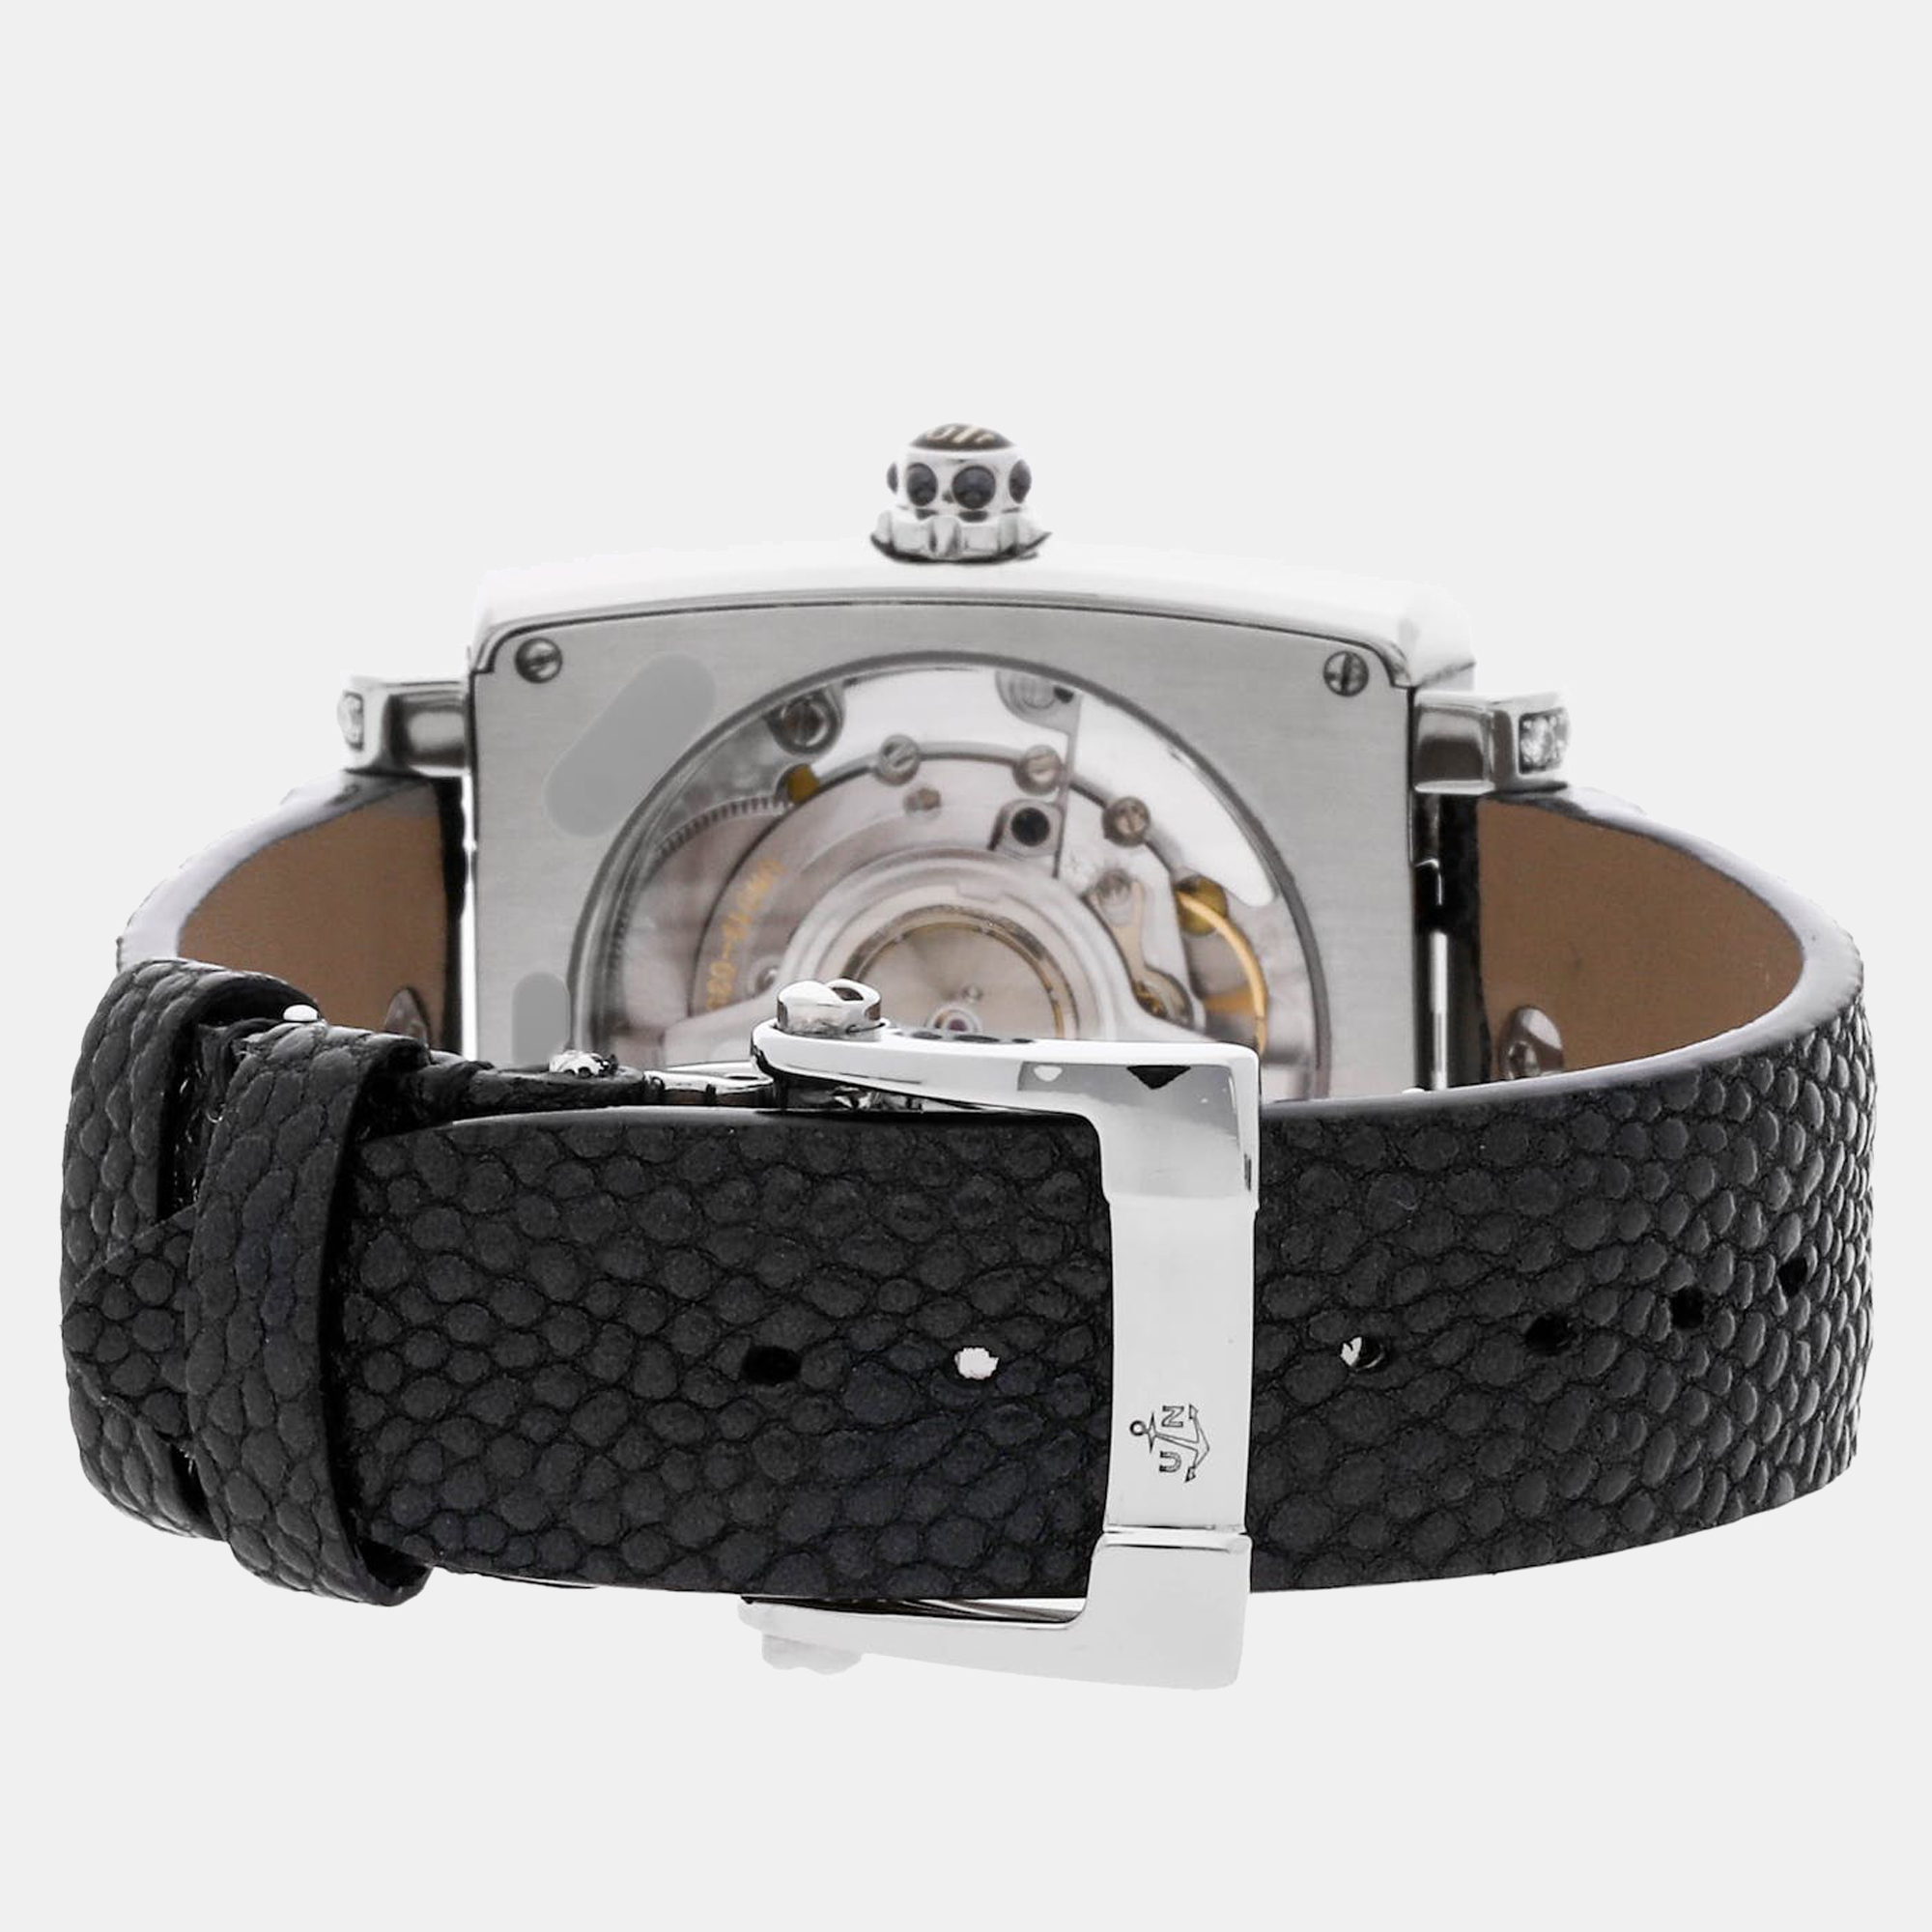 Ulysse Nardin Black Diamond Stainless Steel Caprice 133-91C/06-02 Automatic Women's Wristwatch 34 Mm